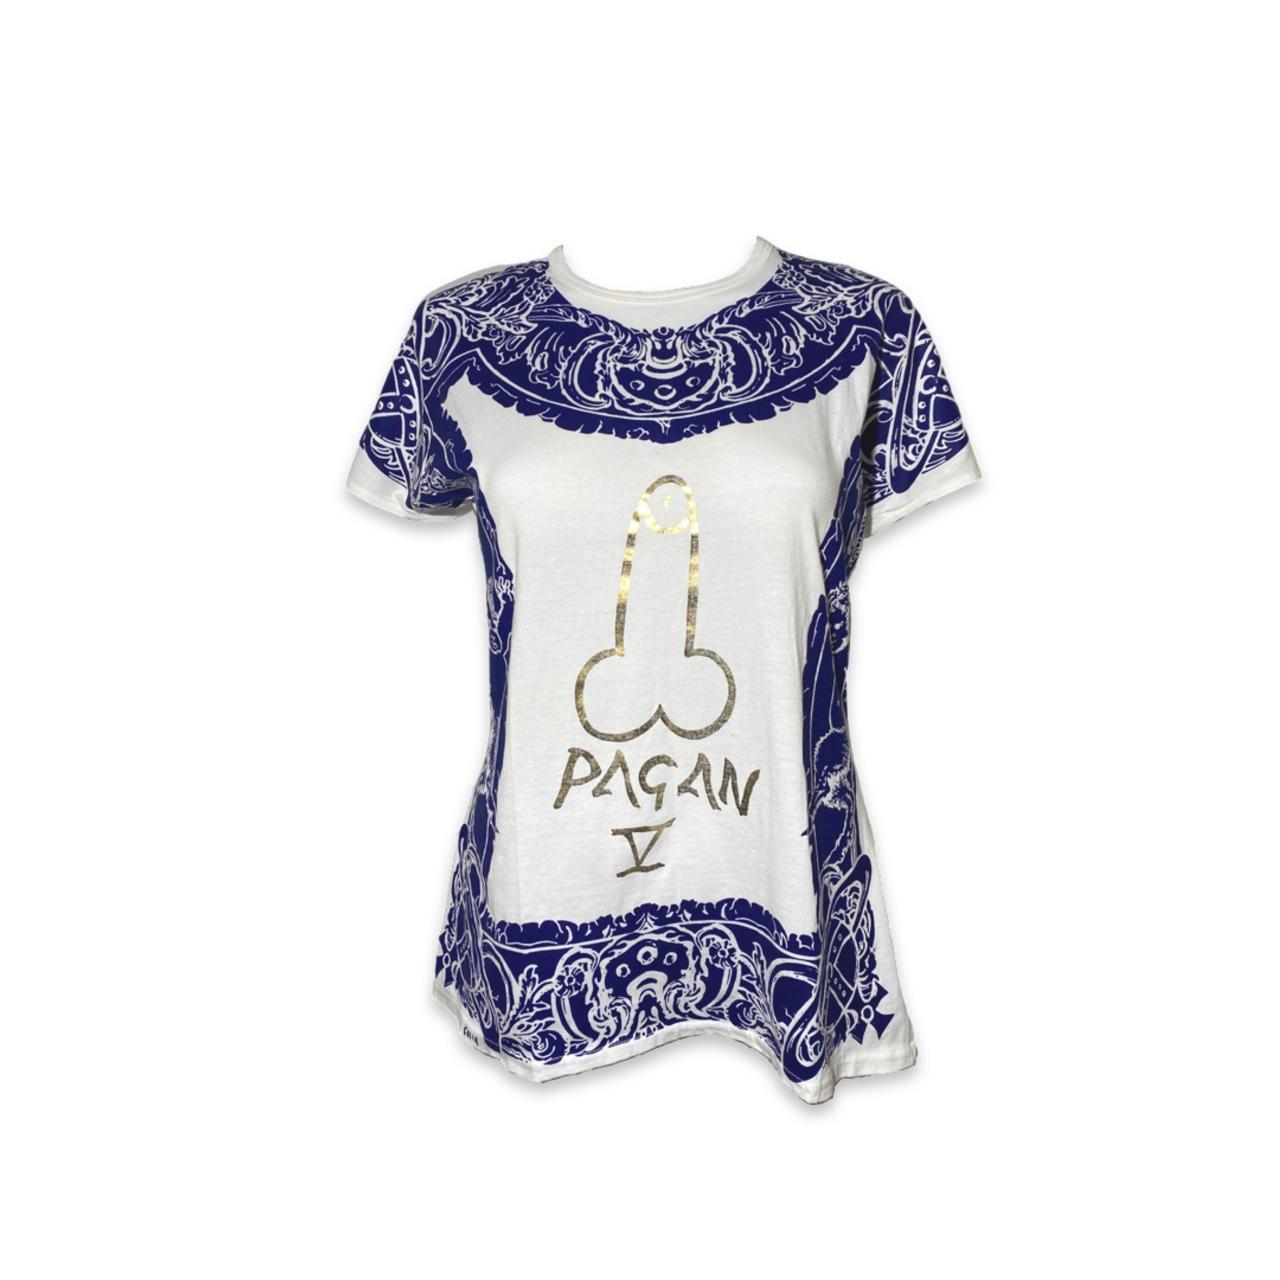 Vivienne Westwood s Pagan T shirt   %   Depop